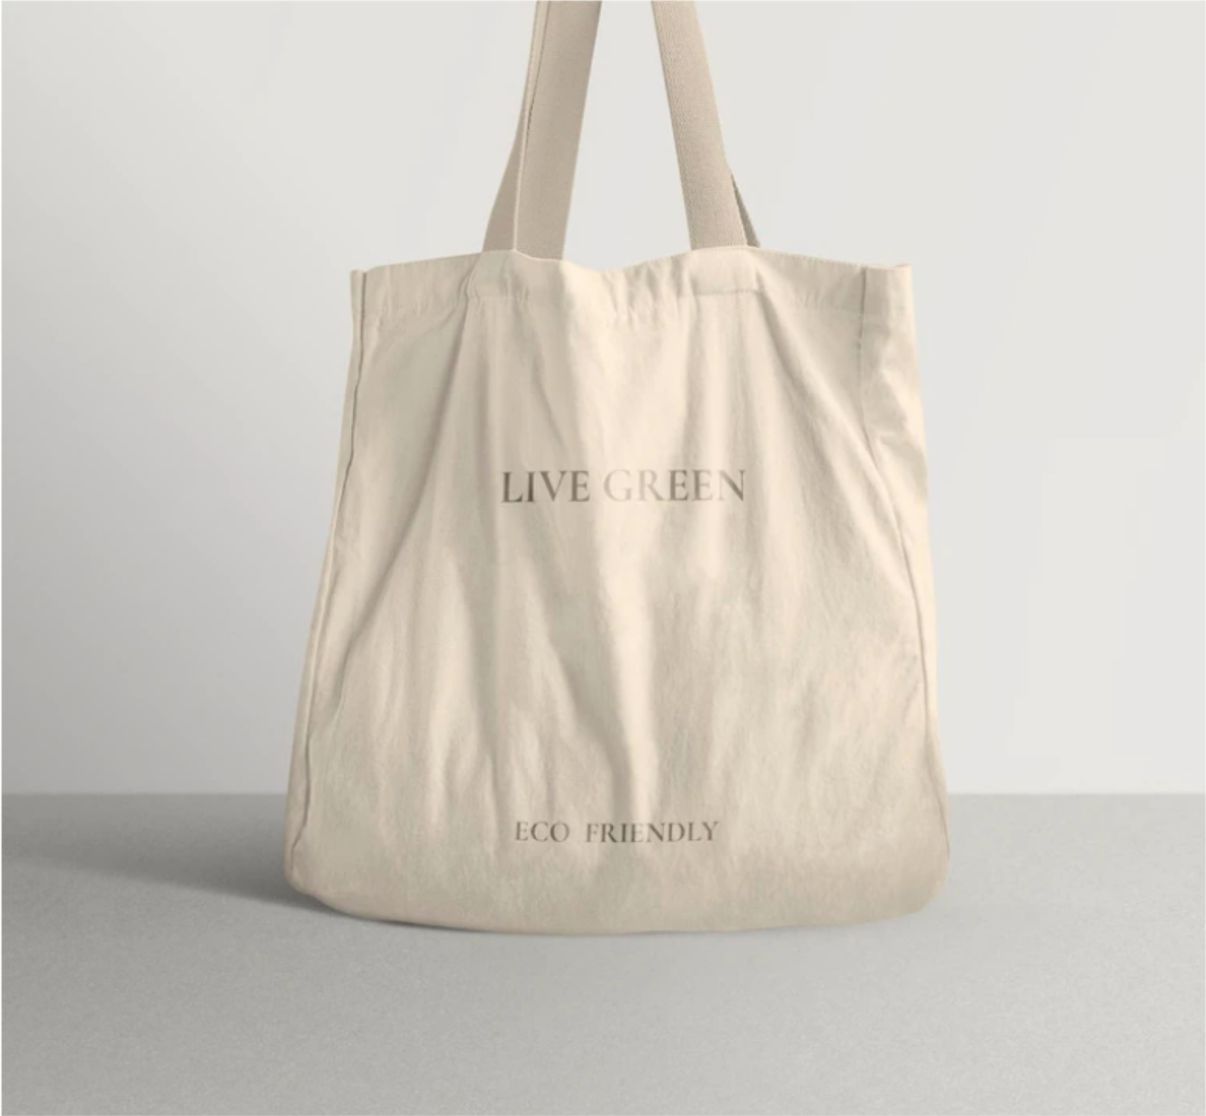 best quality tote bag design & printing in lagos nigeria.